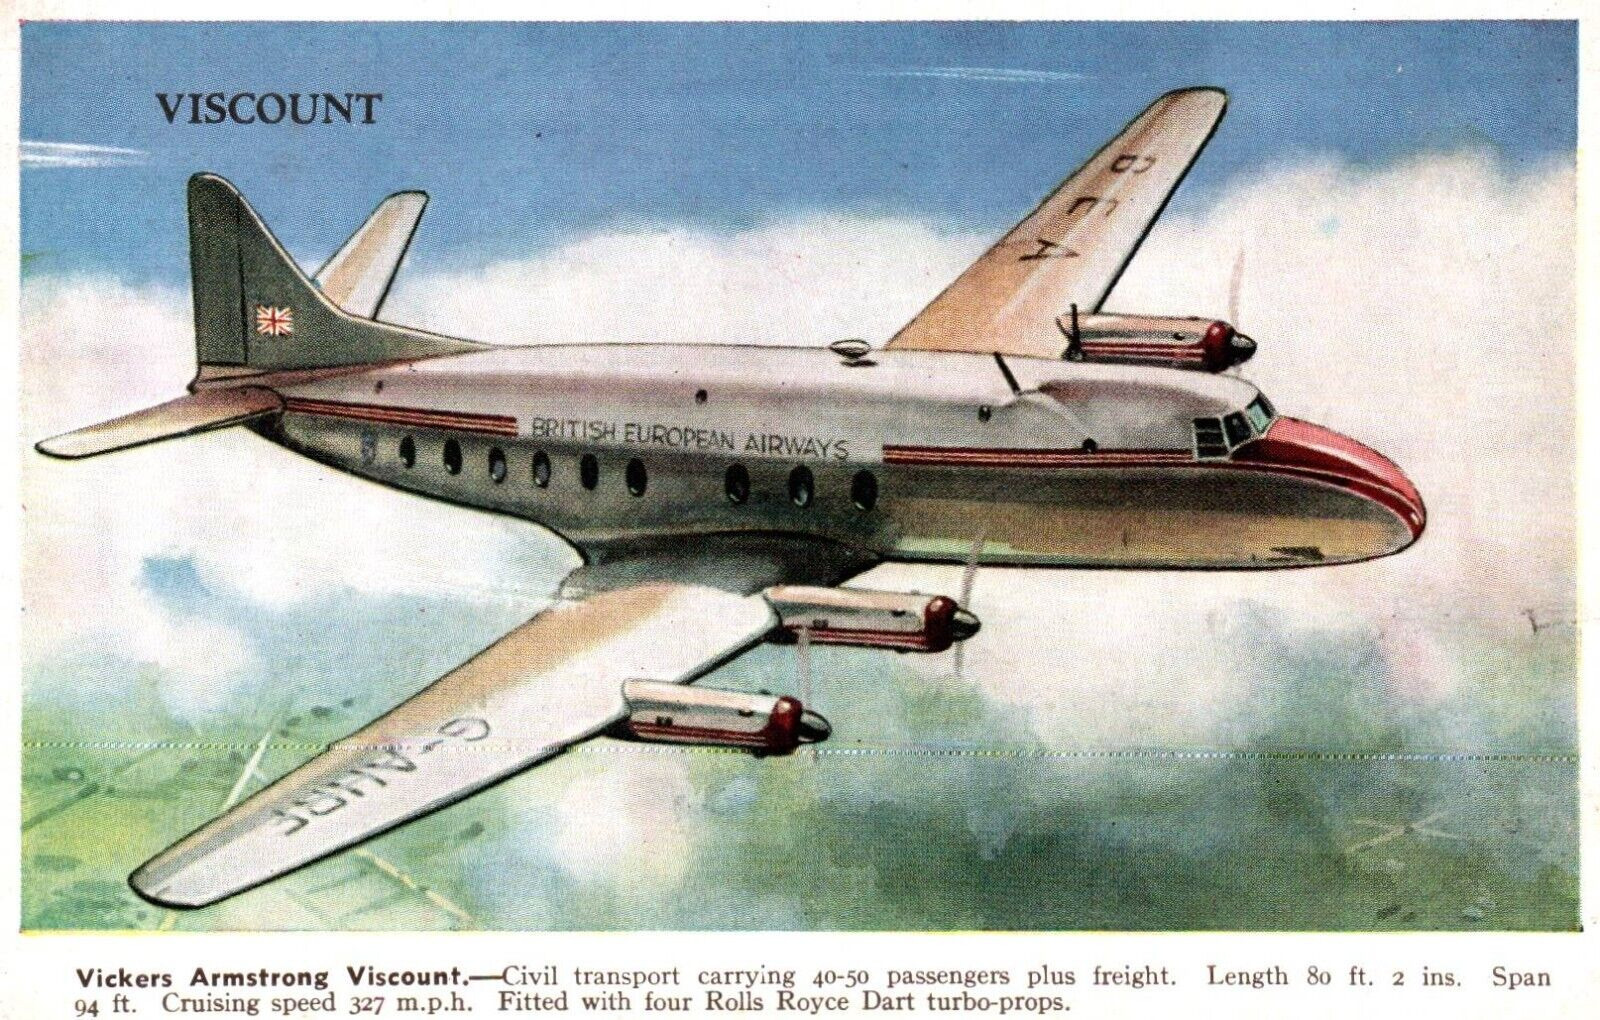 Vickers Armstrong Viscount British European Airways Vintage Postcard